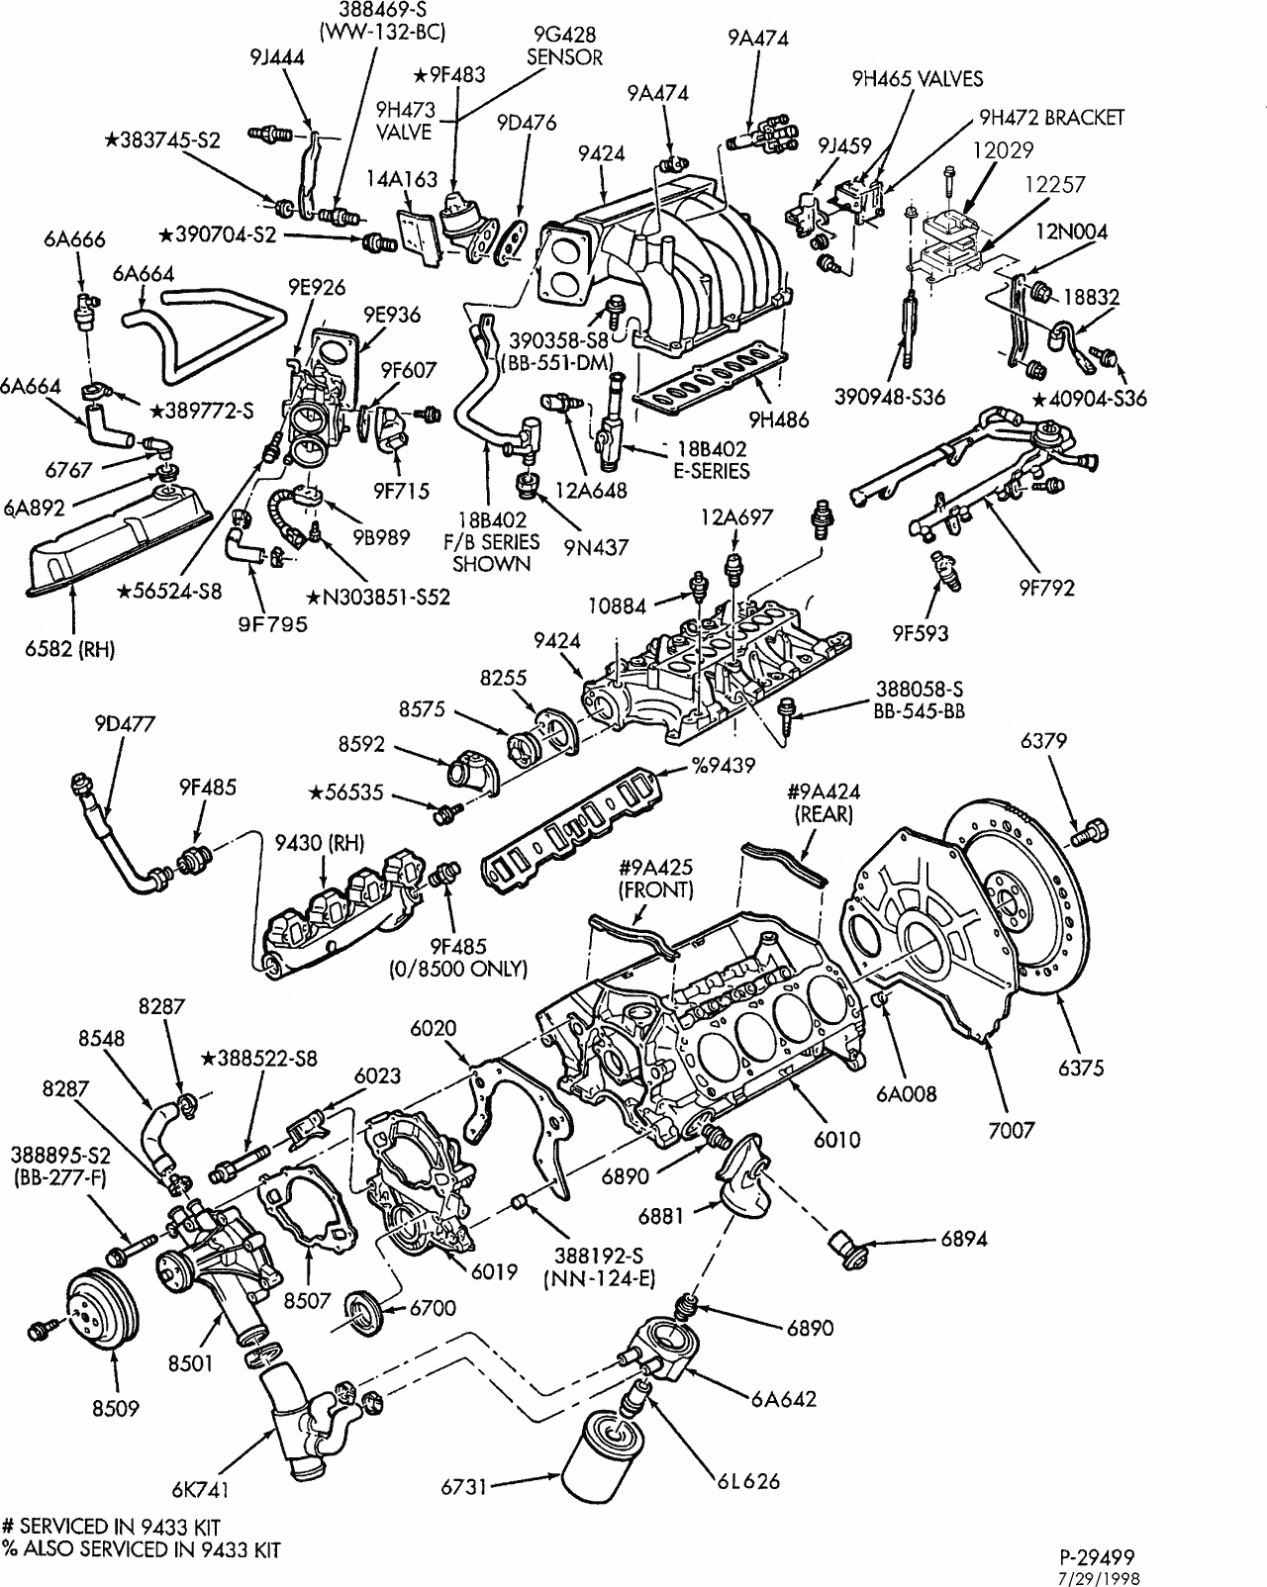 Diagram] 2003 Ford Expedition 4 6 Engine Diagram Full